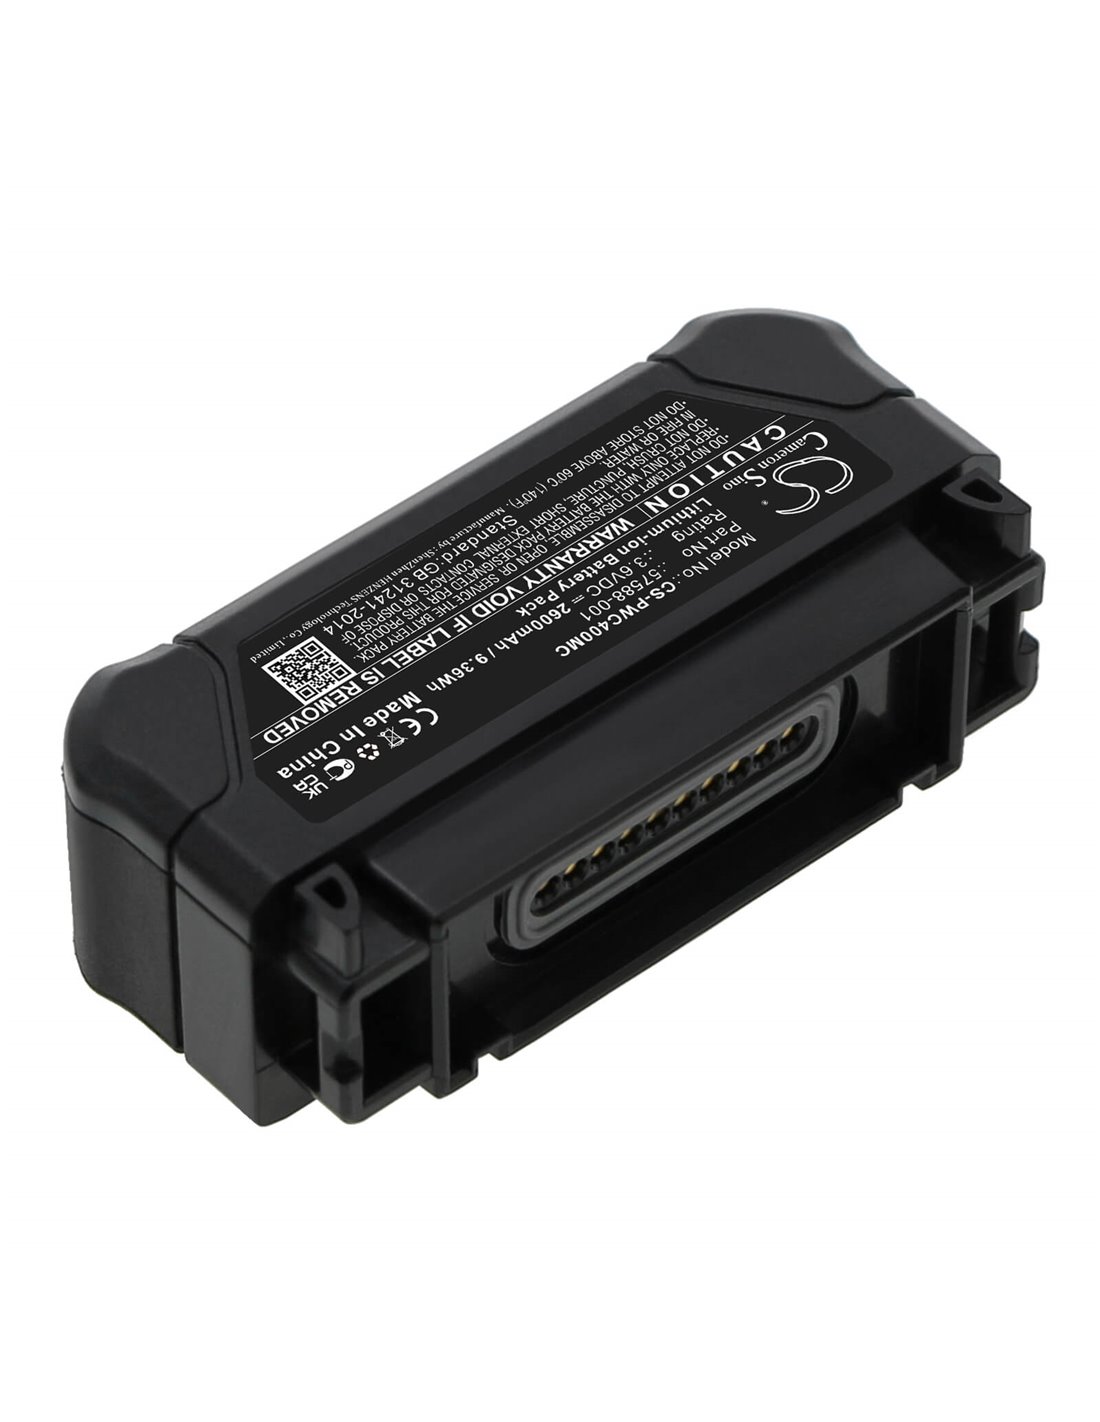 3.6V, Li-ion, 2600mAh, Battery fits Panasonic I-pro Bwc4000 Body-worn Camera, Wv-bwc4000, 9.36Wh